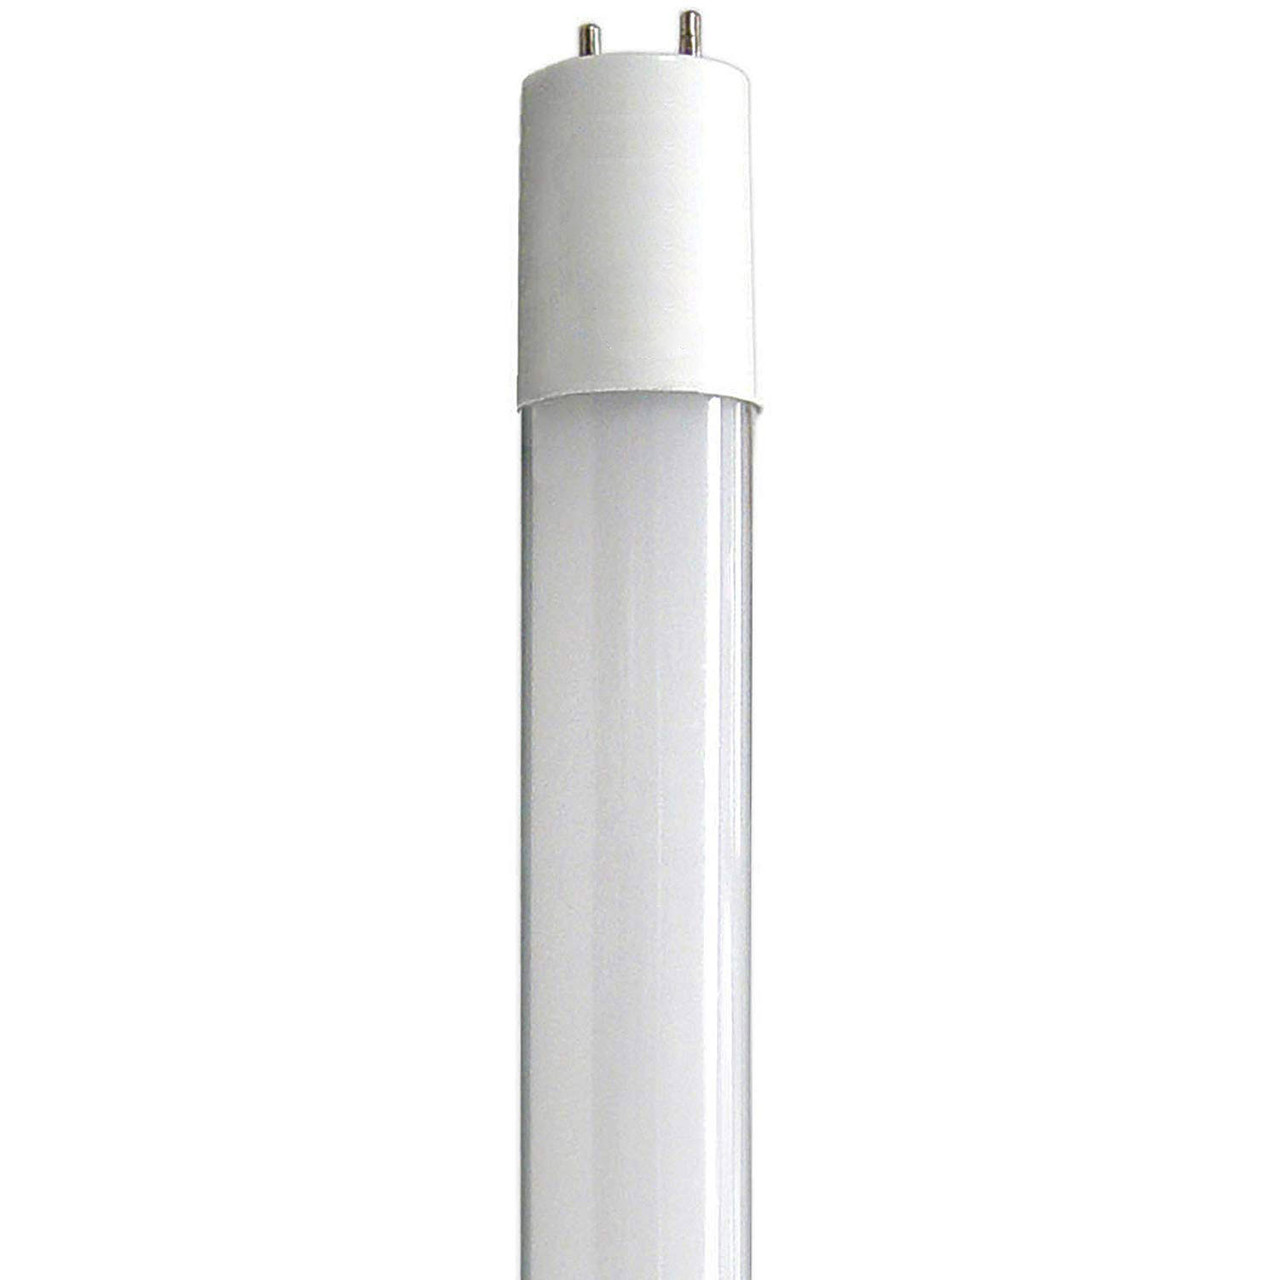 LED T8 Linear Retrofit Bulb - 2 Foot - 8 Watt - 1250 Lumens - 3500K Neutral White - Electronic T8 Ballast Compatible Only